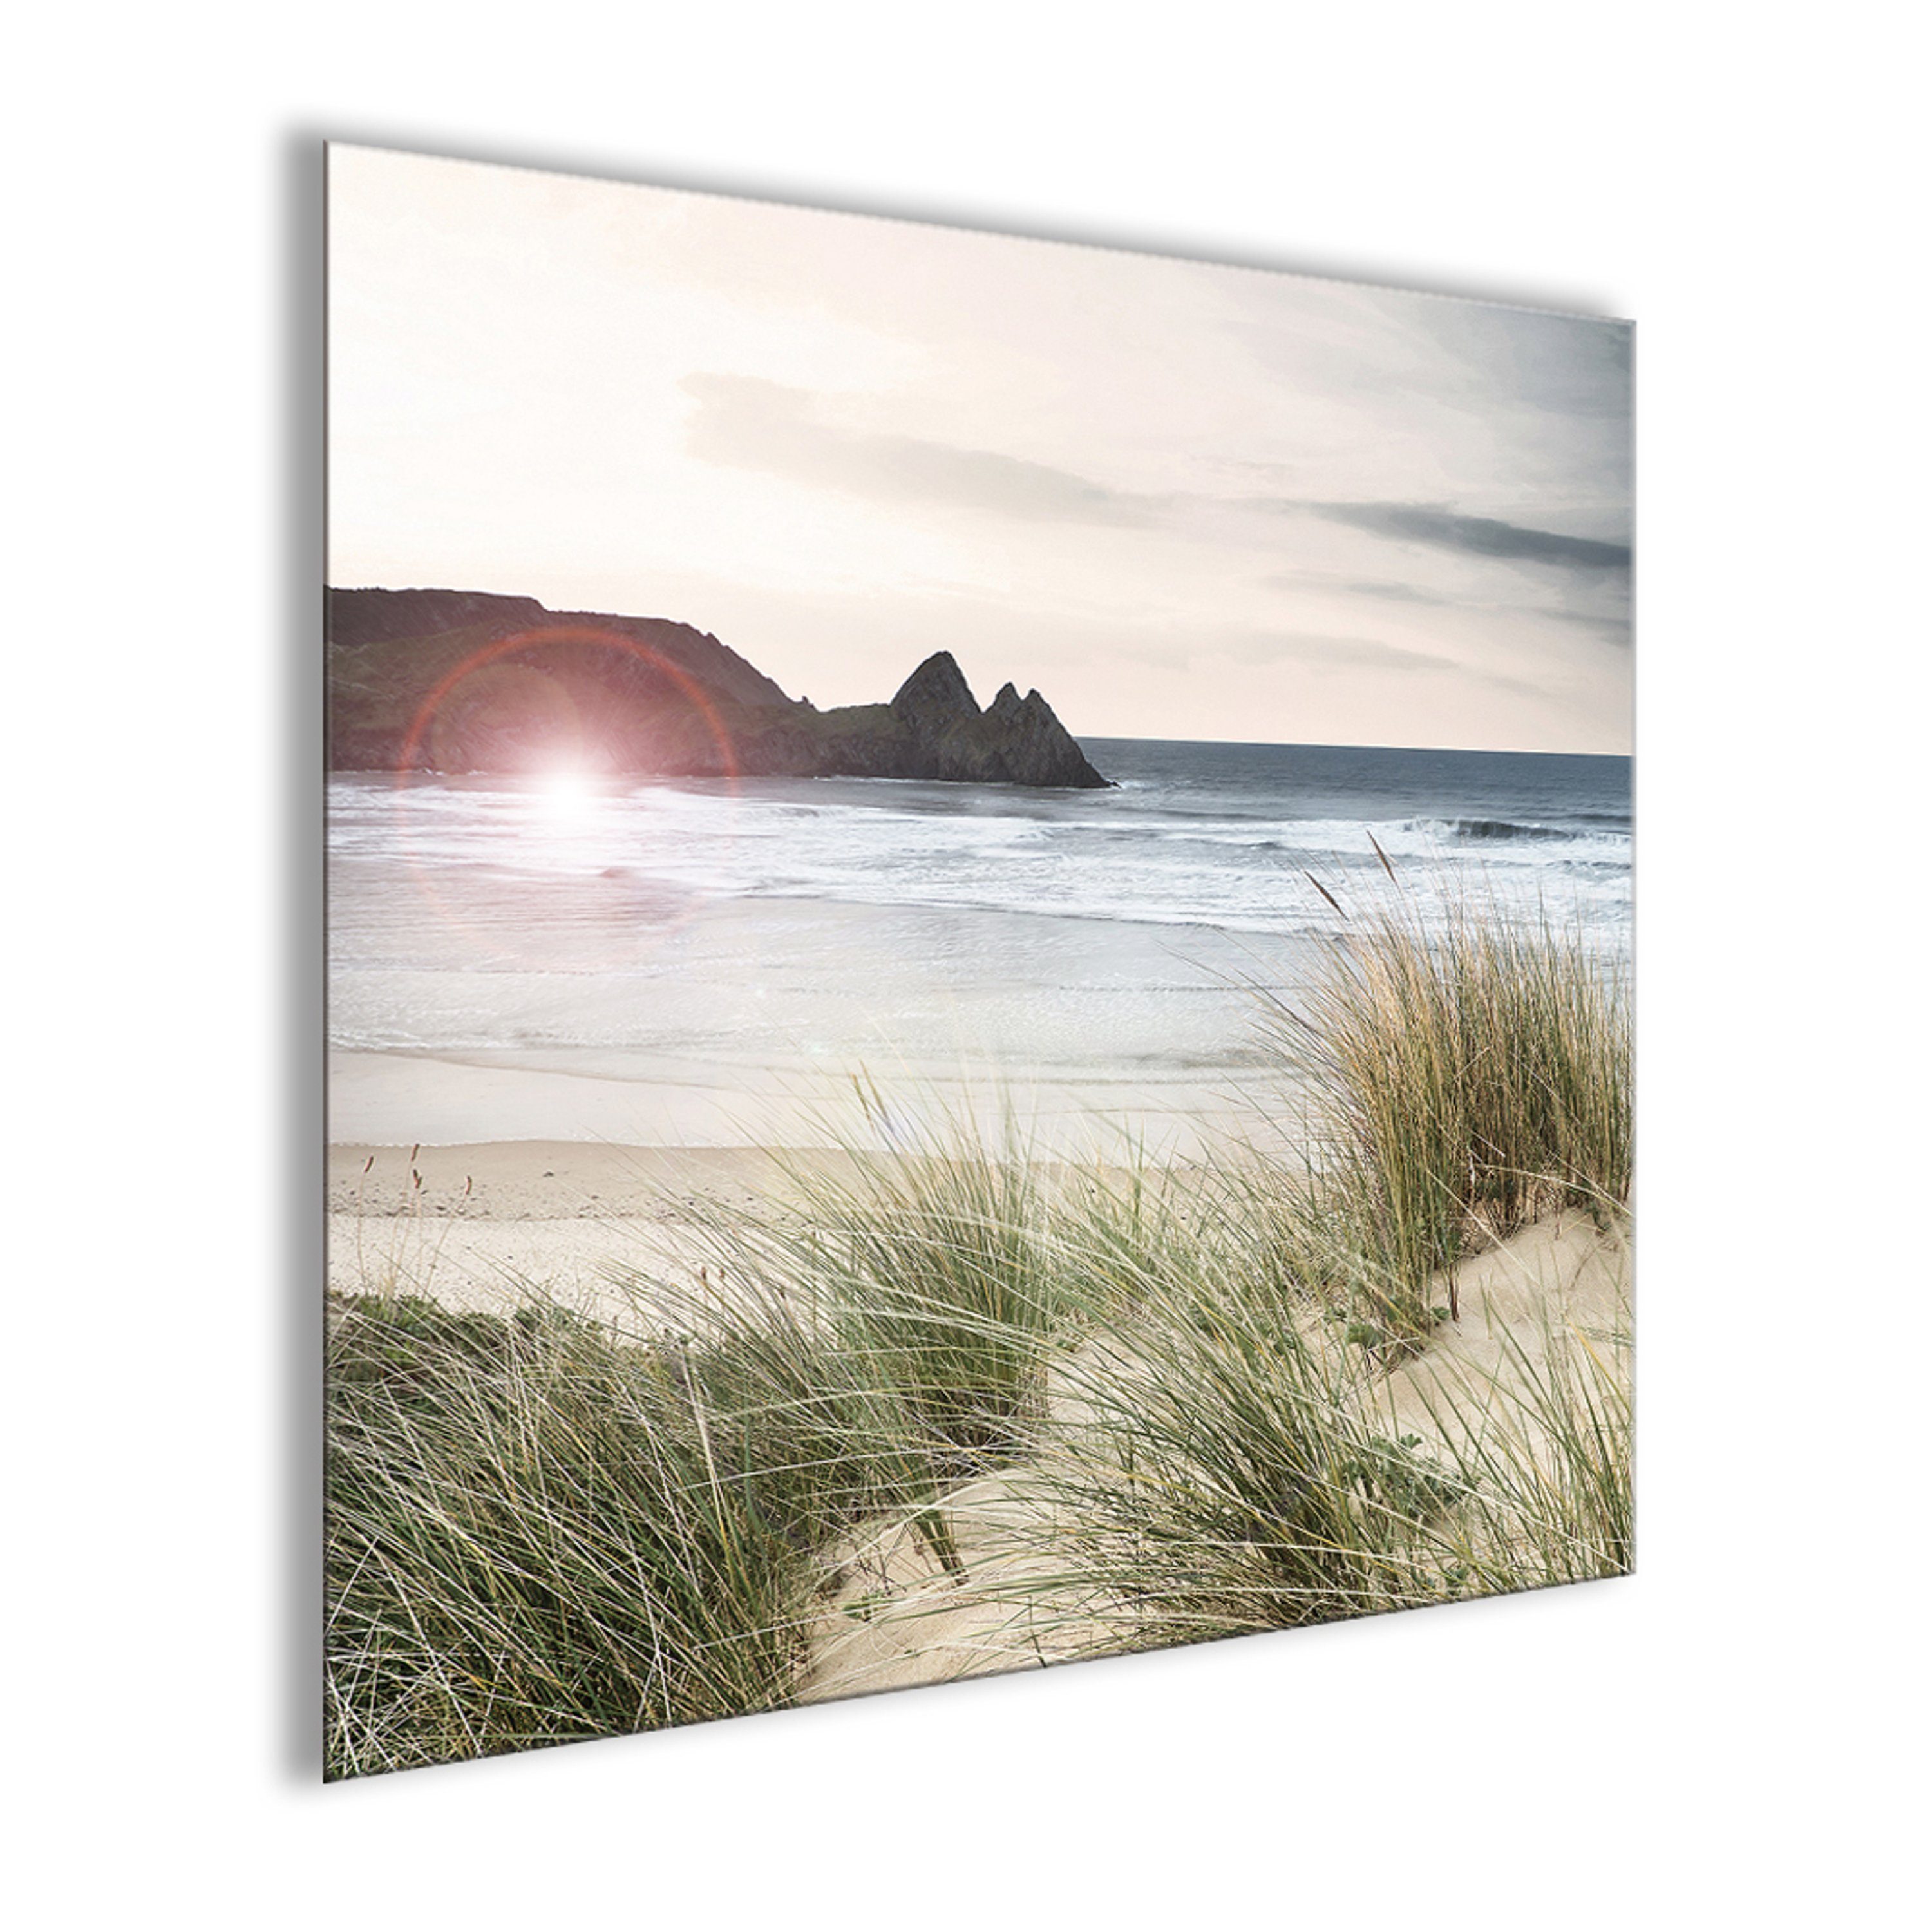 Landschaft Düne Meer Strand aus Glasbild Bild 50x50cm Glasbild artissimo Glas